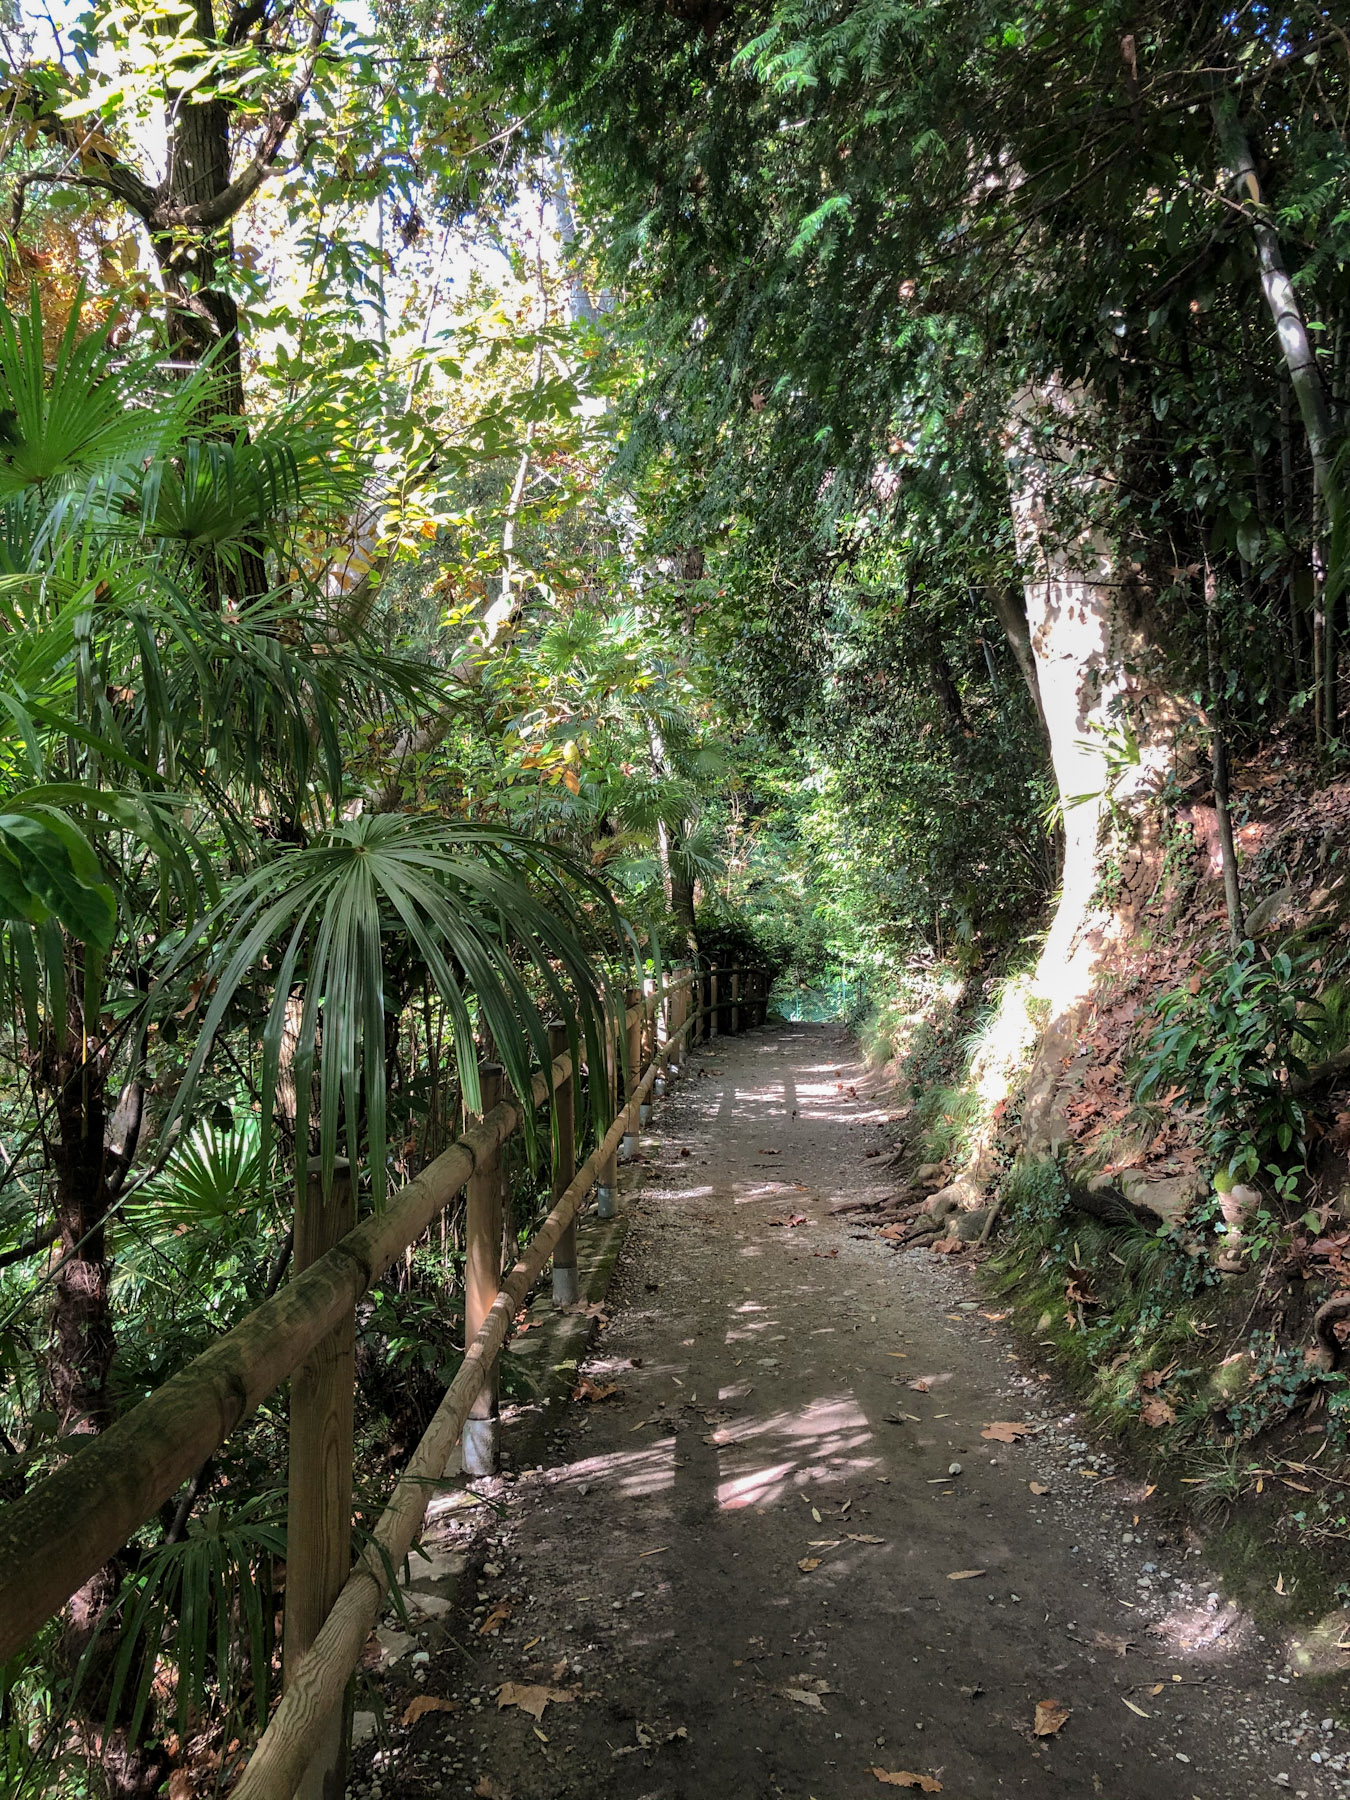 Walking Trail in the Botanical Gardens of Villa Carlotta, Tremezzina, Italy